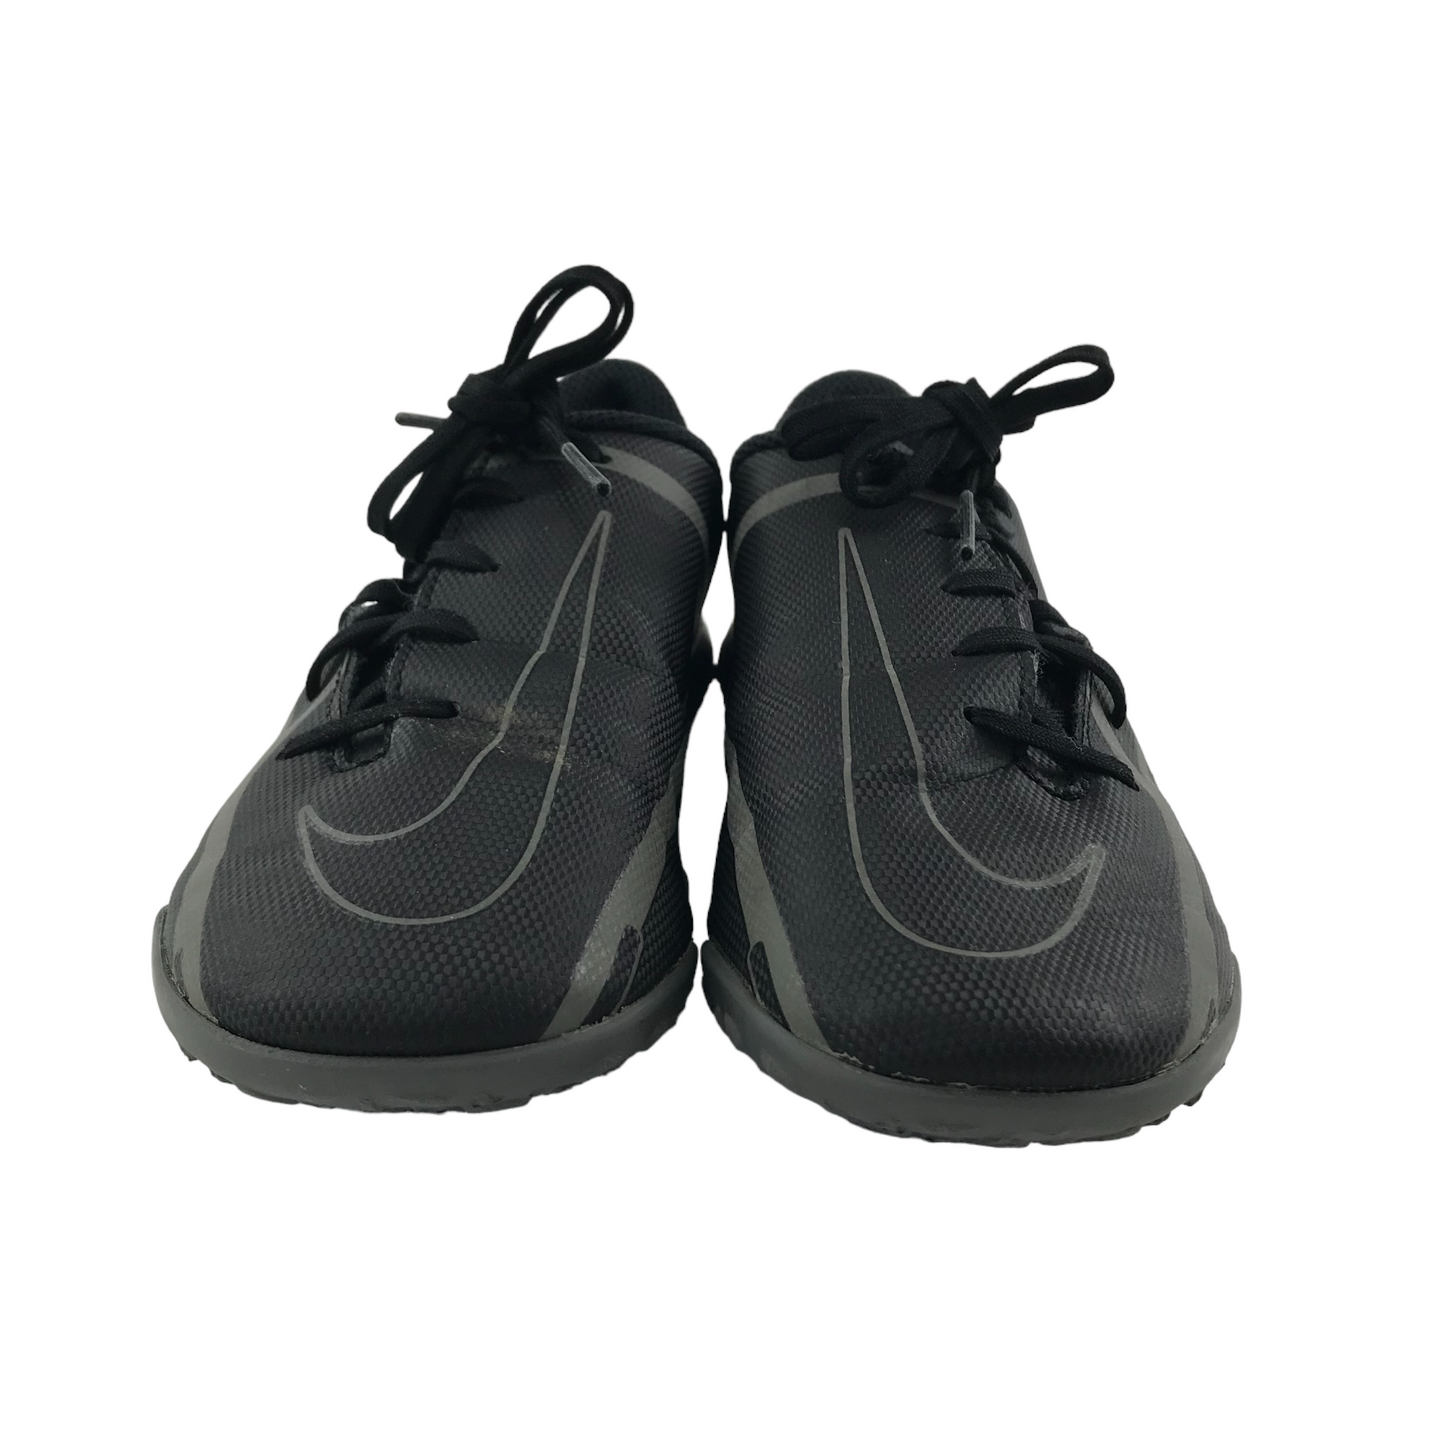 Nike Phantom Football Boots Shoe Size 13 Junior Black Astroturf